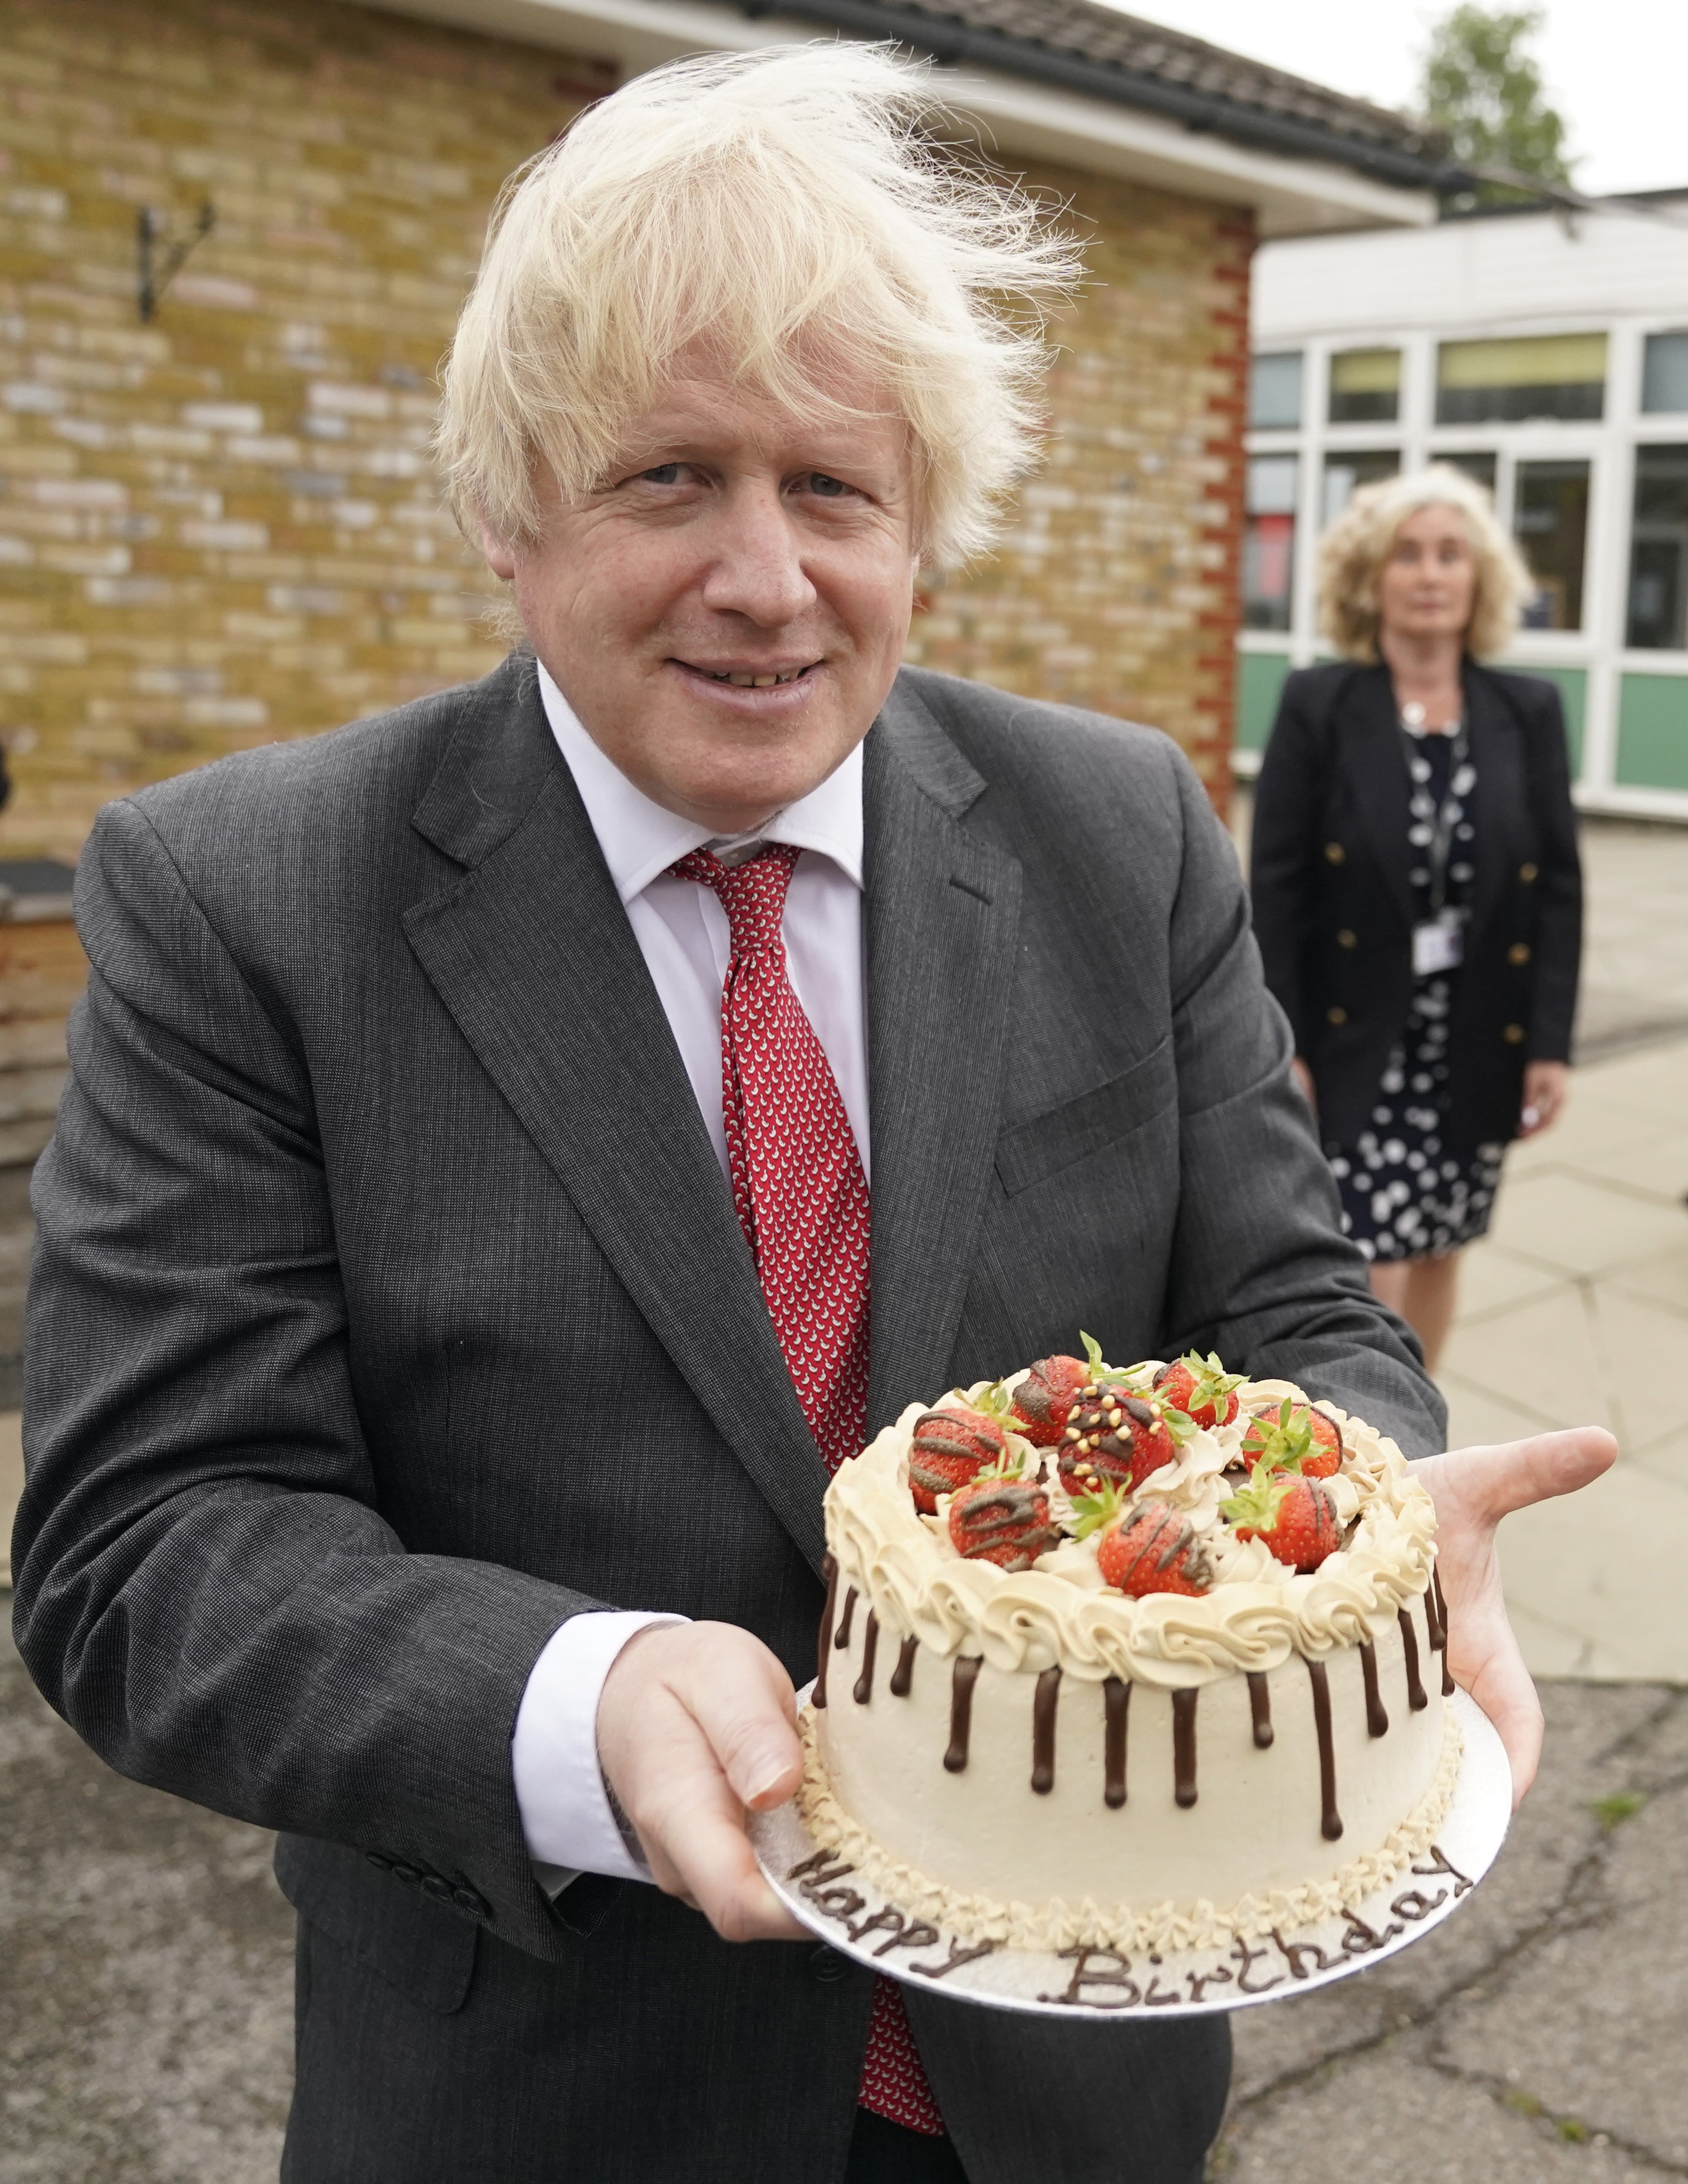 Boris Johnson, with cake, on his birthday in 2020